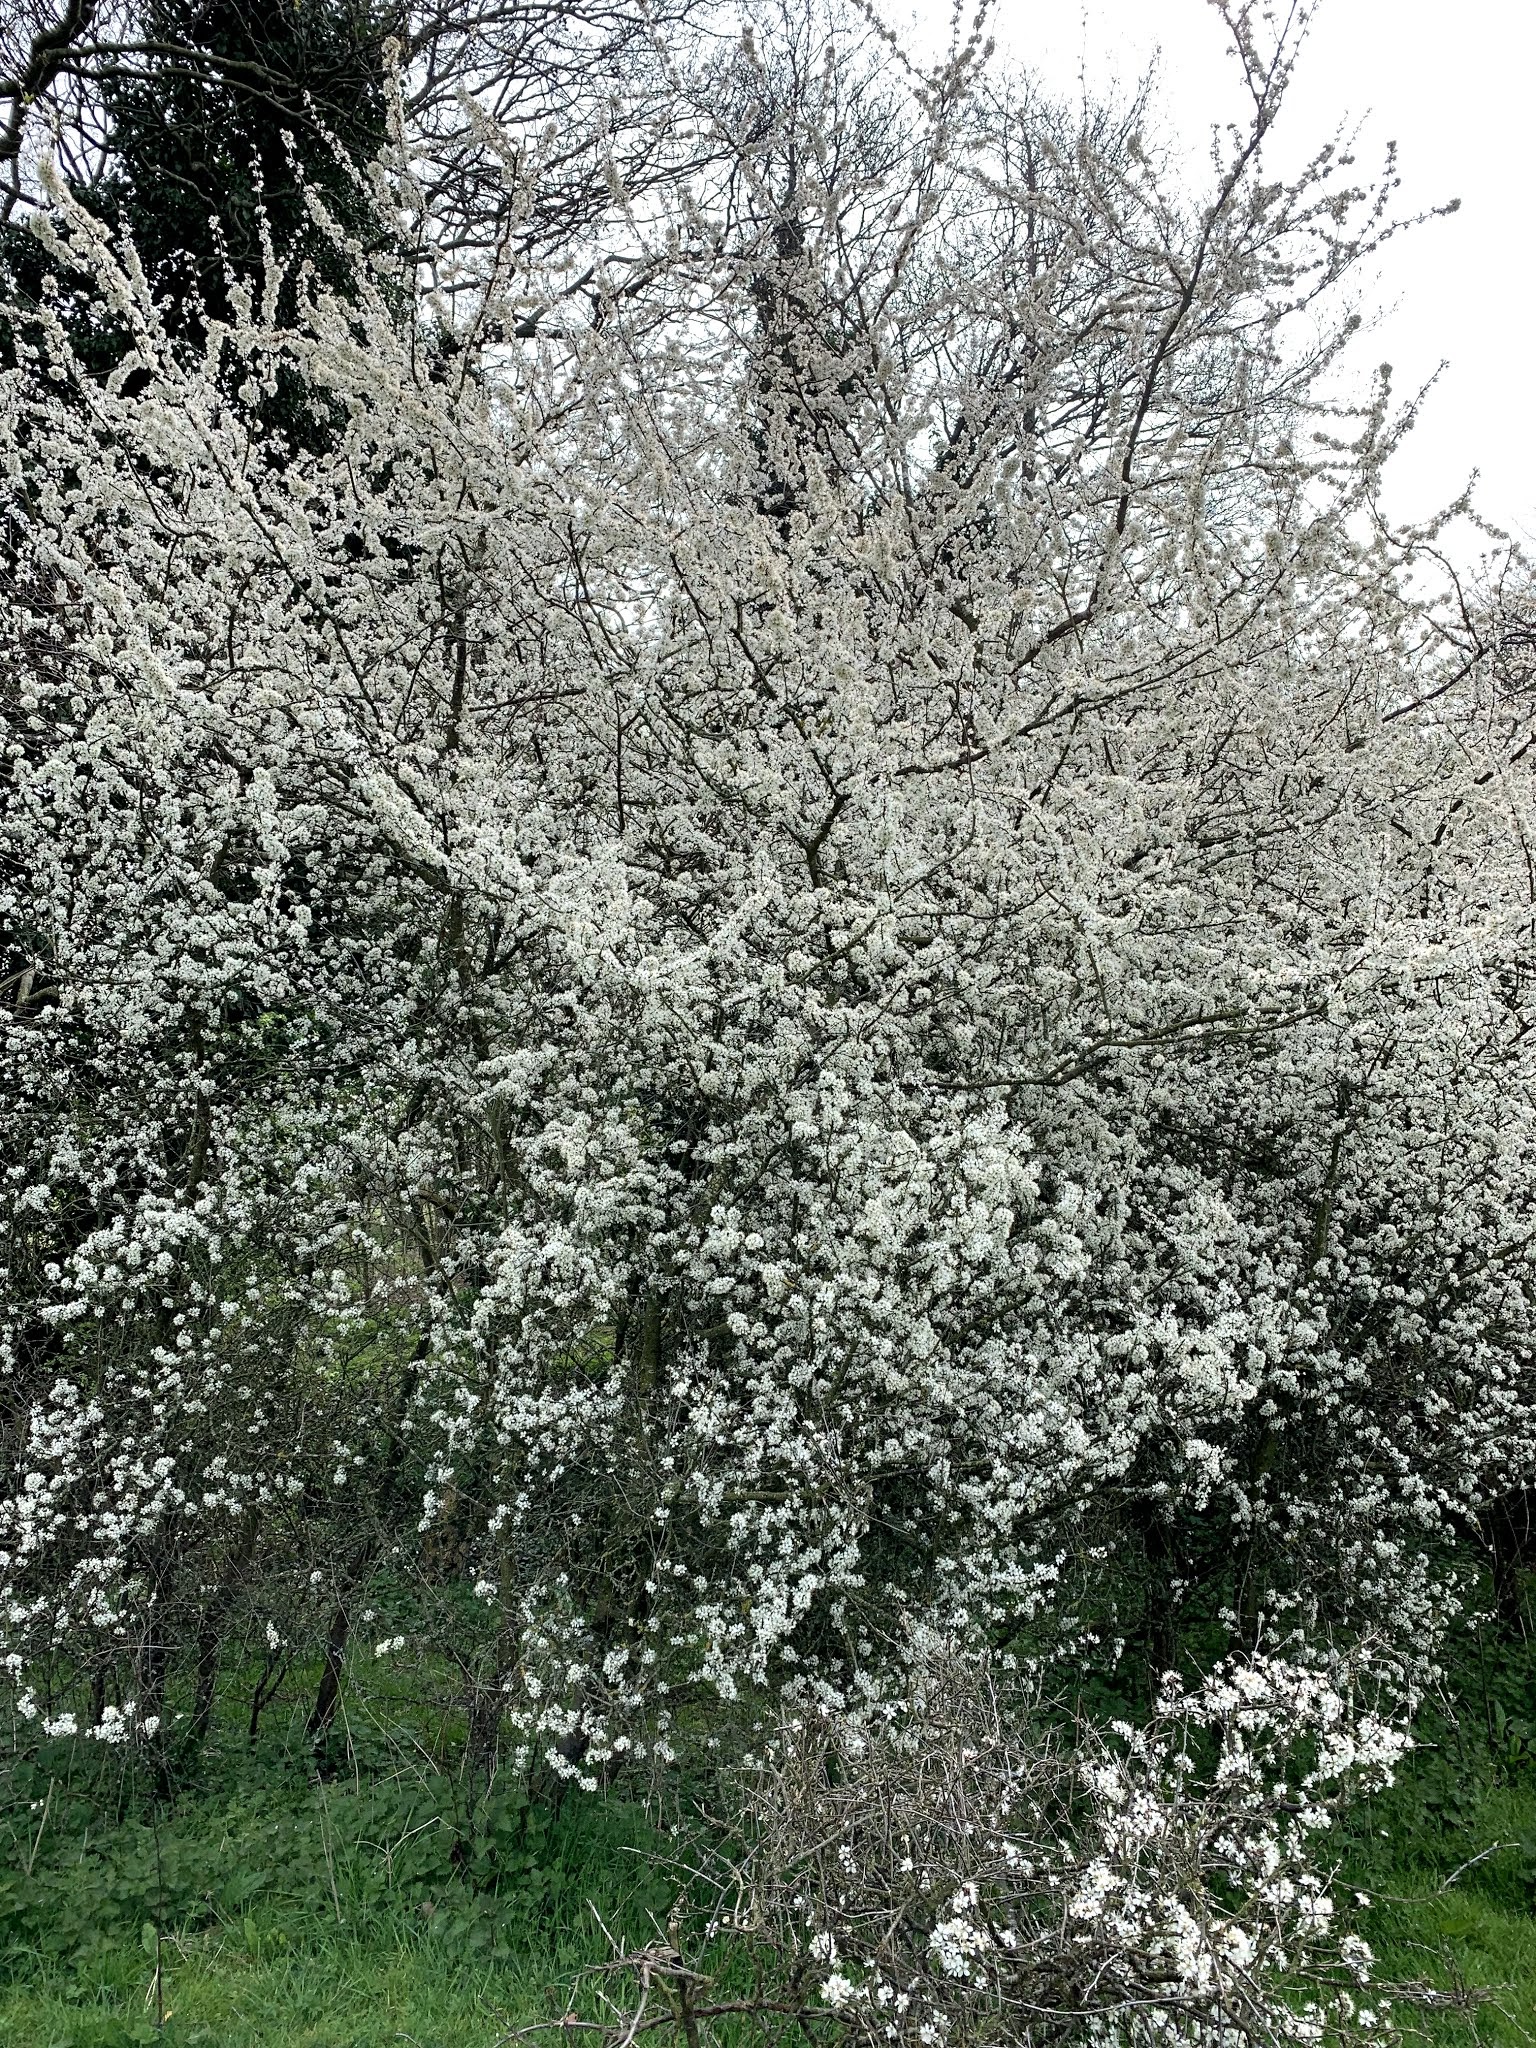 bush covered in white petals